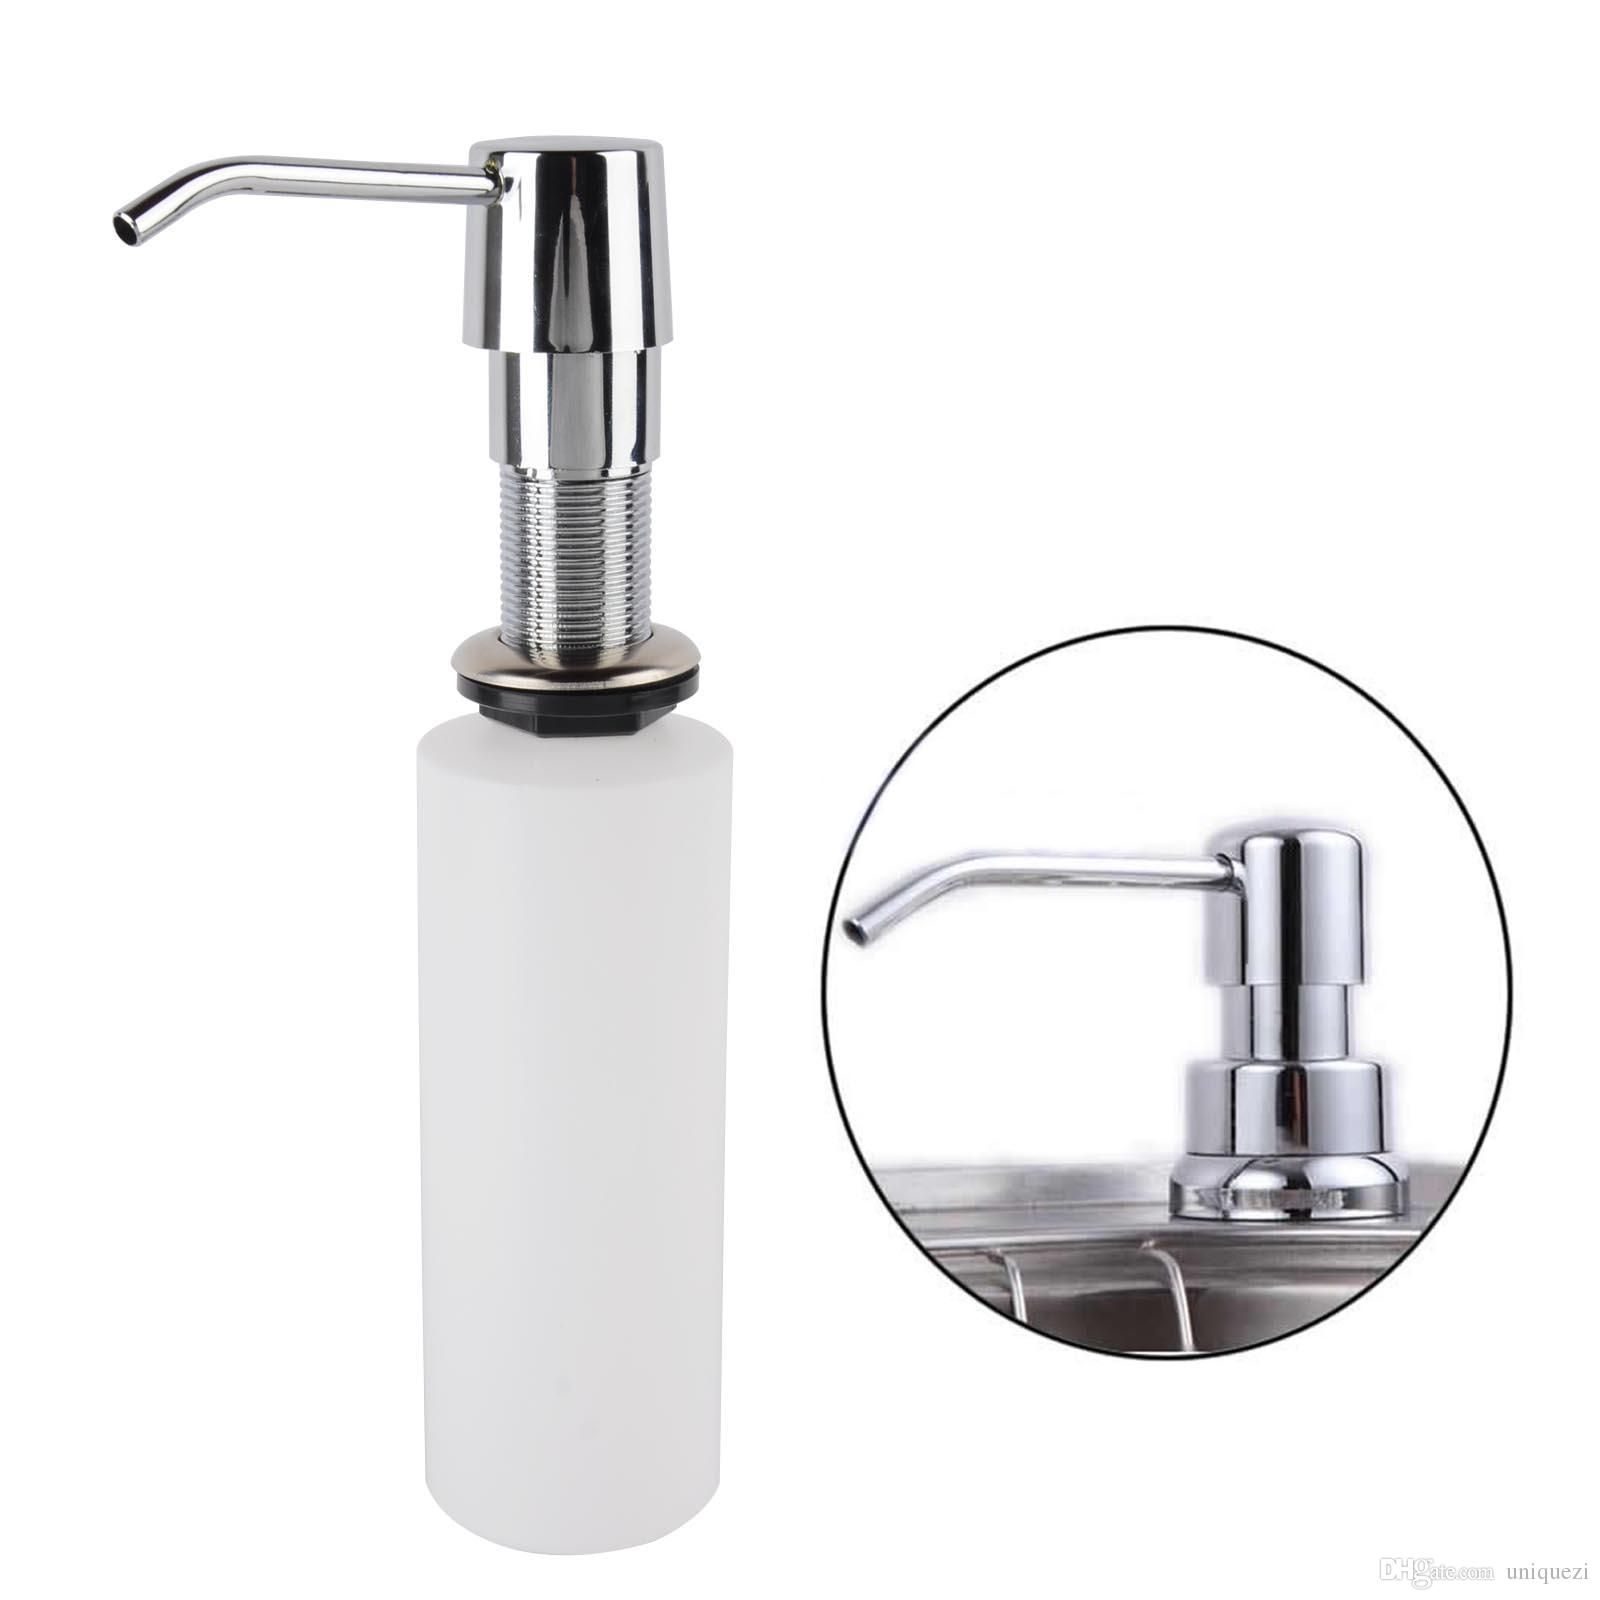 2019 250ml Plastic Stainless Steel 300ml Bathroom Kitchen Sink Liquid Soap Dispenser From Pig 4 3 Dhgate Com